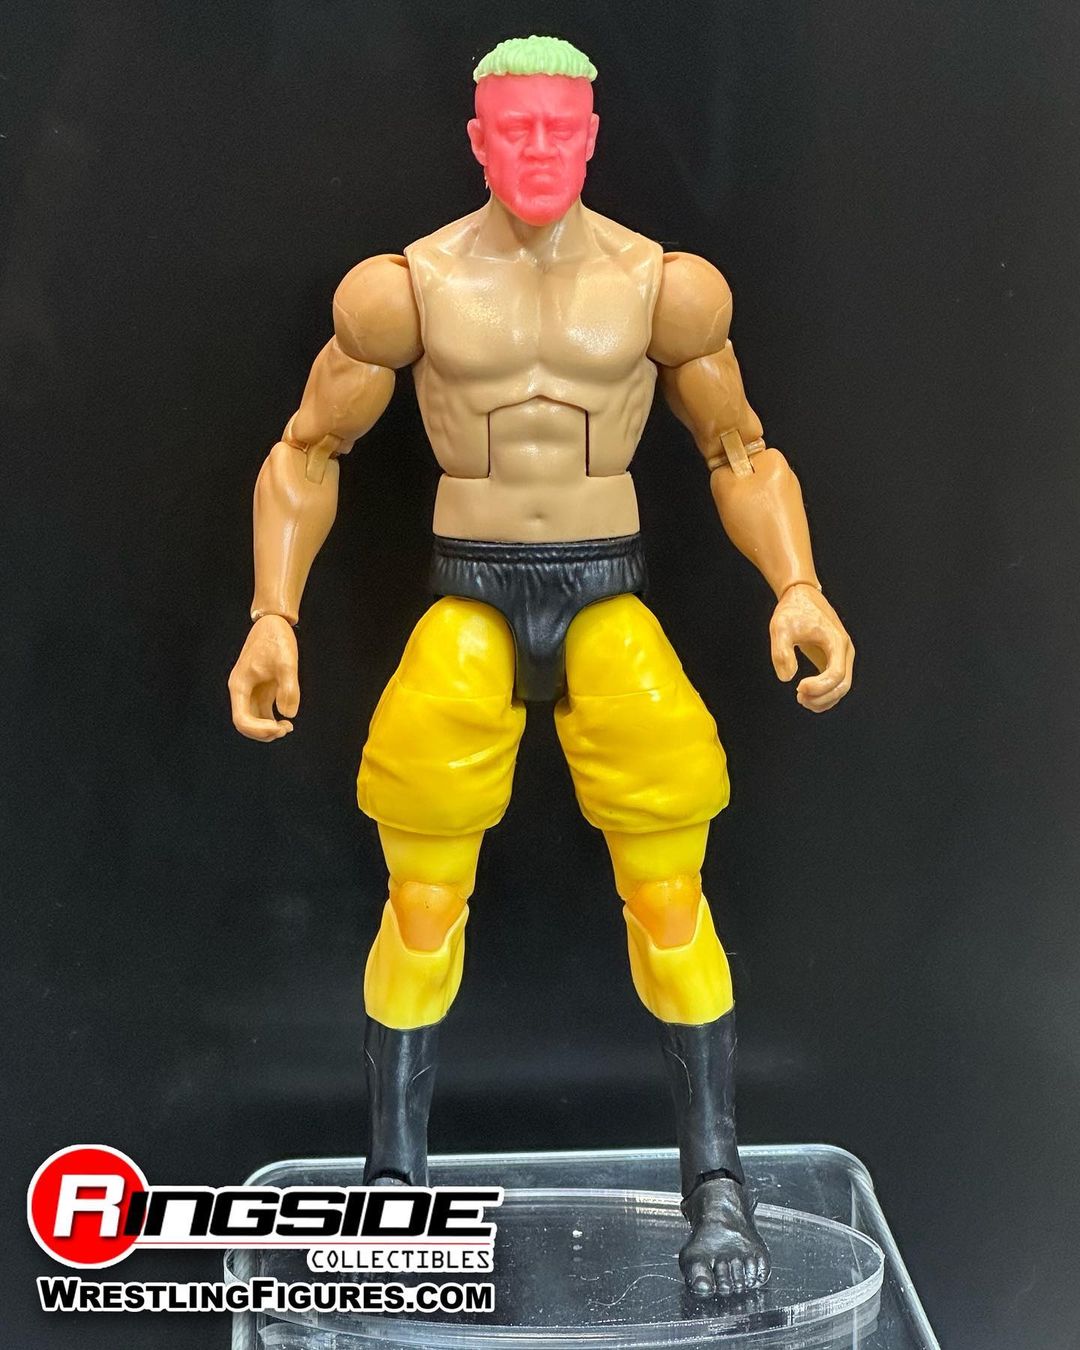 Solo Sikoa - WWE Elite Collection - Series 104 - Mattel Action Figure